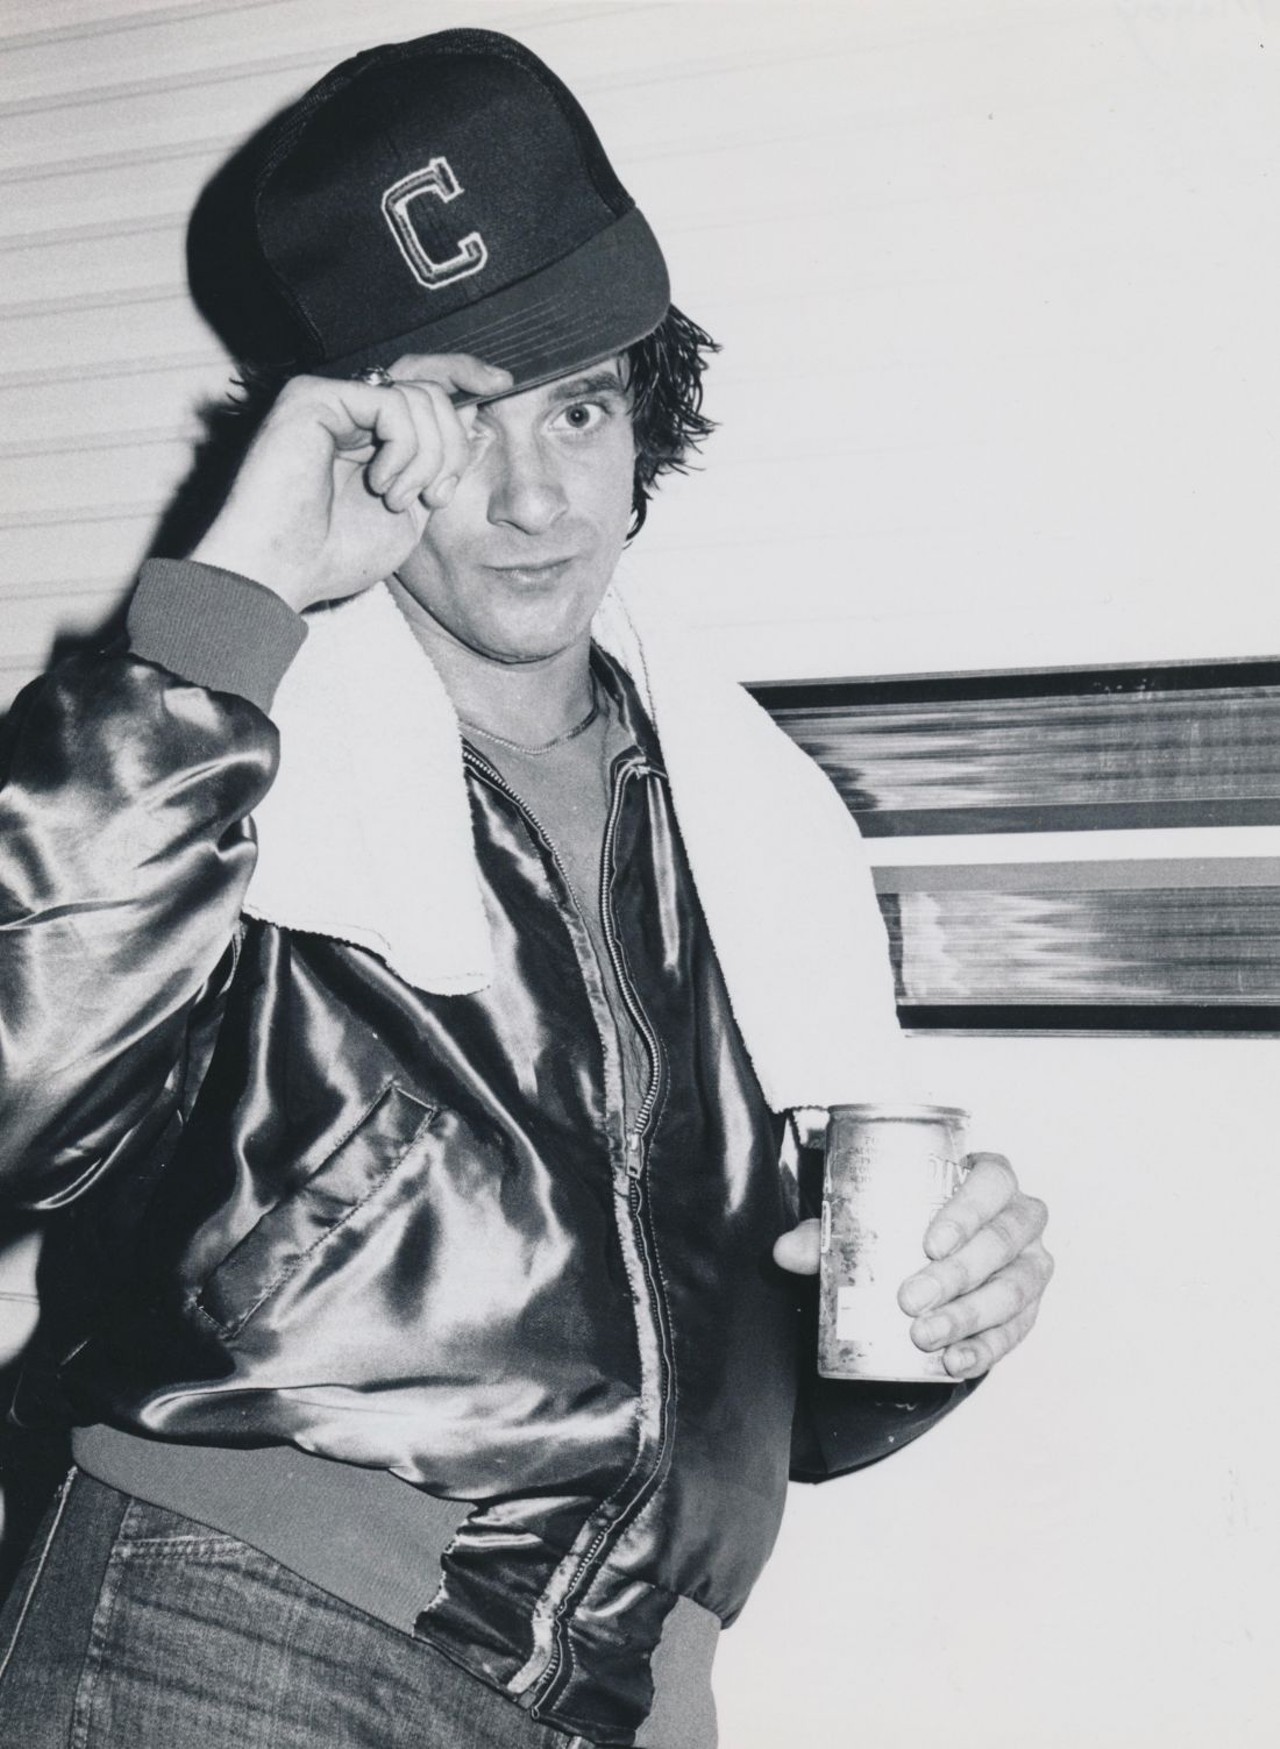 Eddie Money at the World Series of Rock in 1980